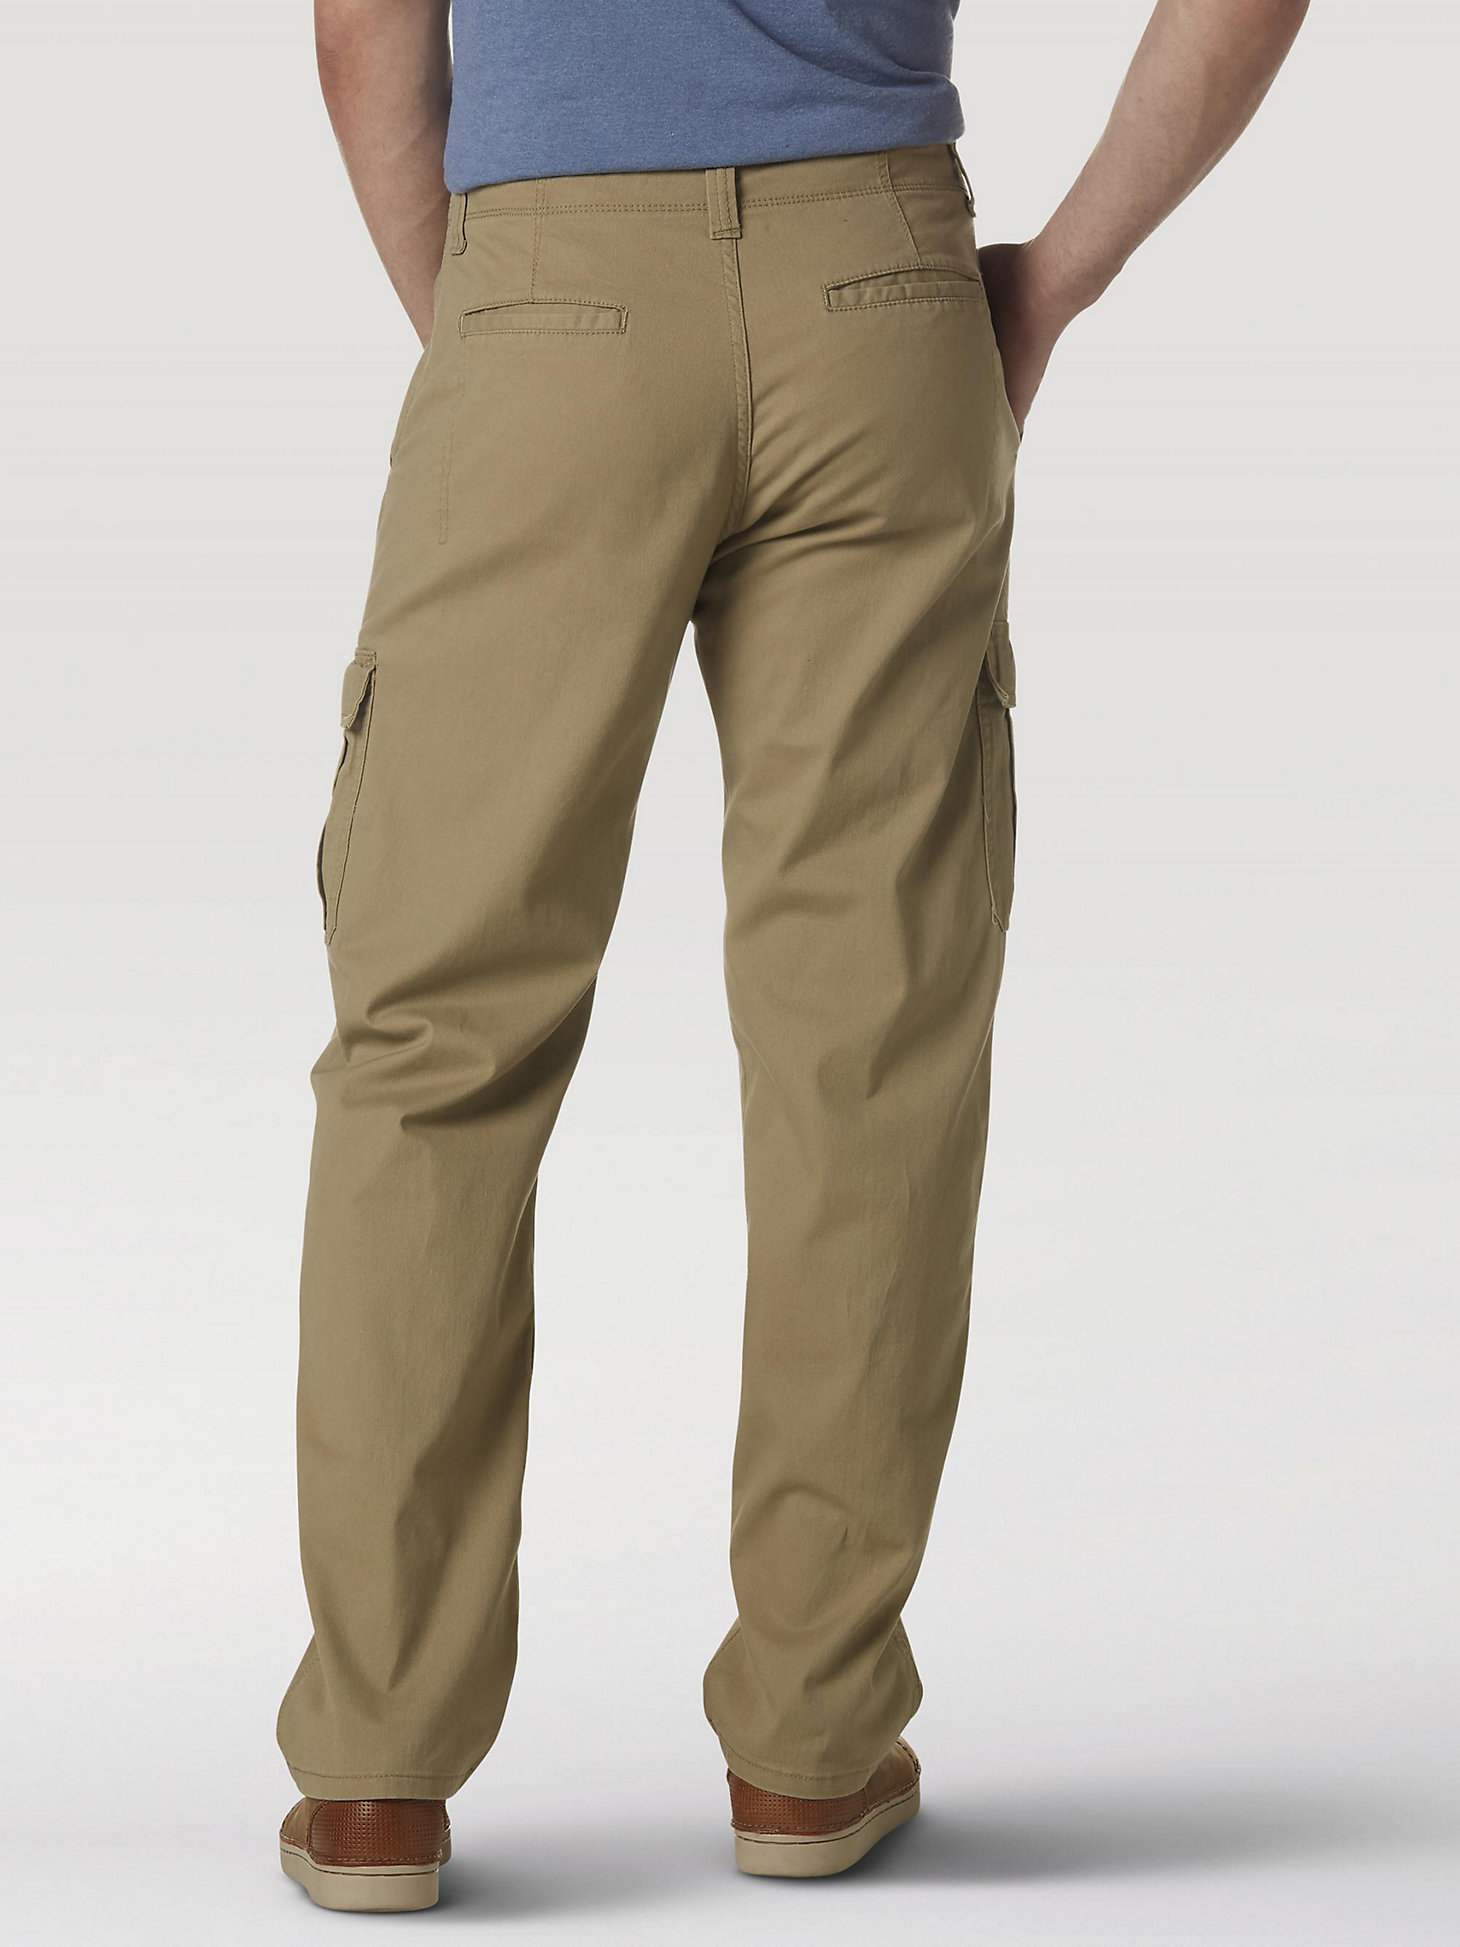 Wrangler® Men's Five Star Premium Relaxed Fit Flex Cargo Pant in Elmwood alternative view 1